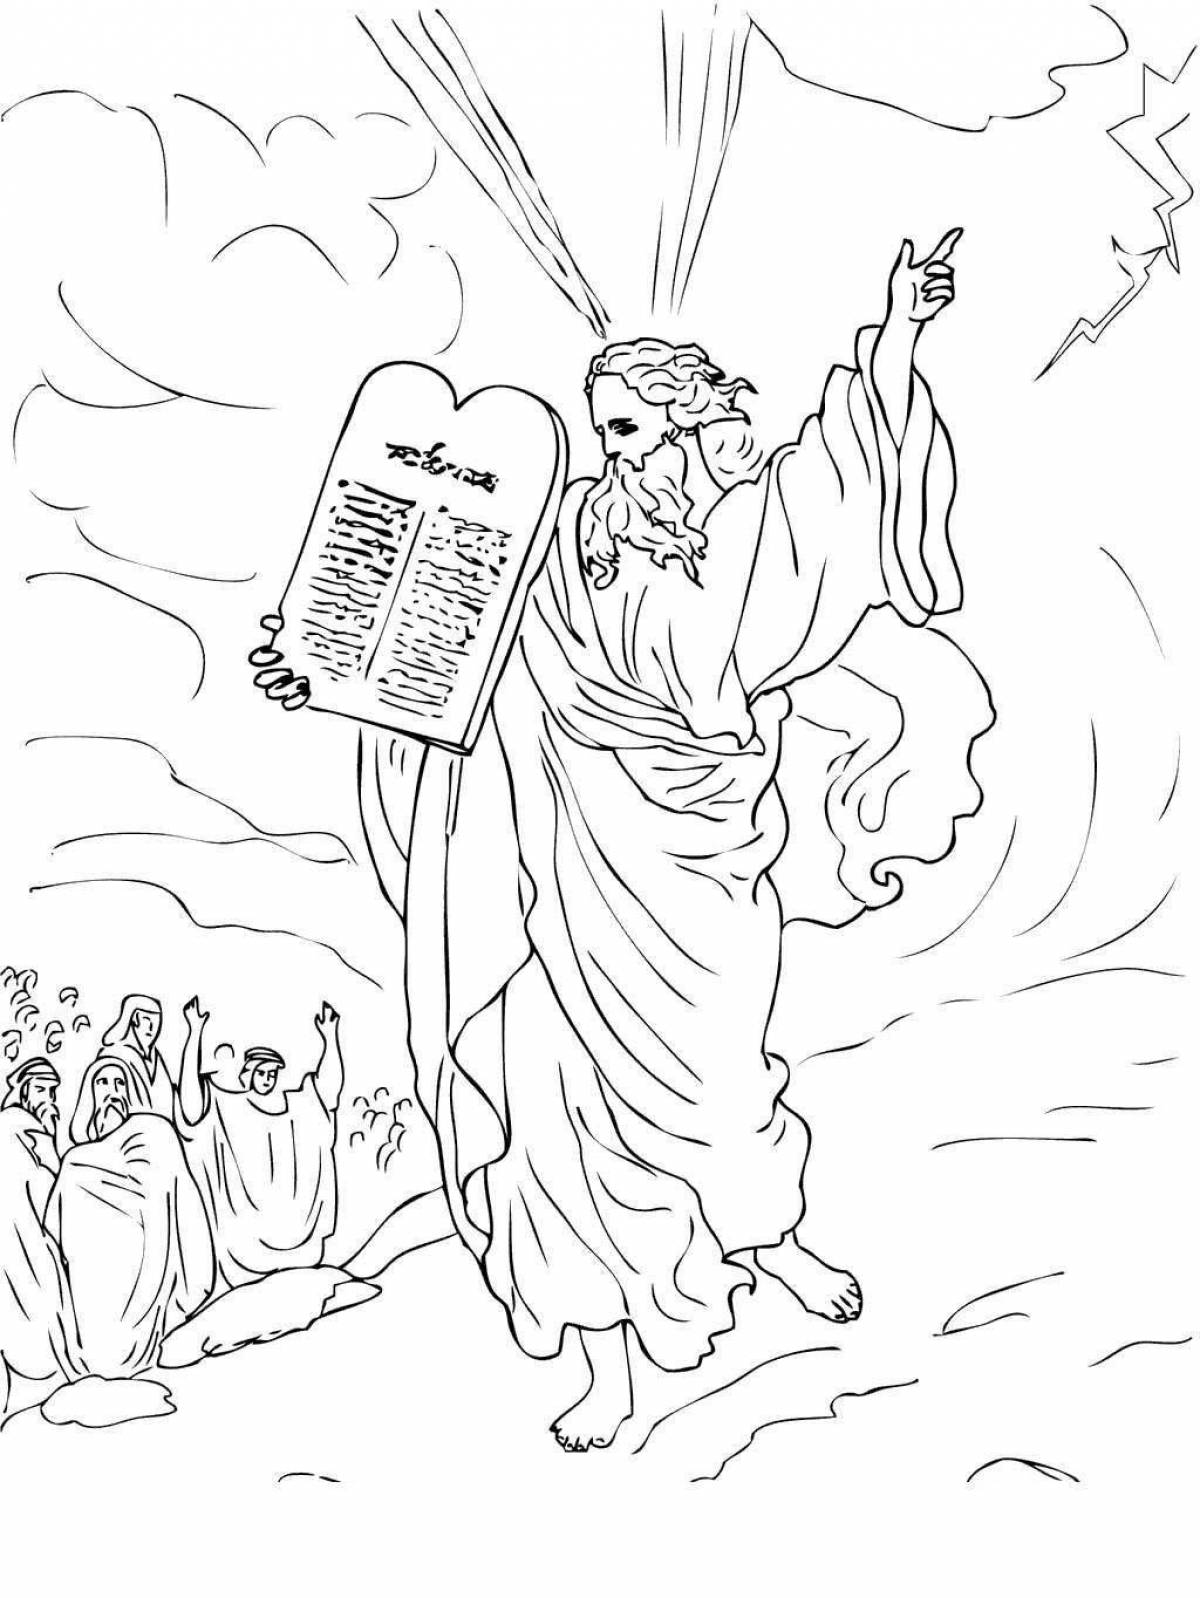 Exciting 10 commandments coloring book